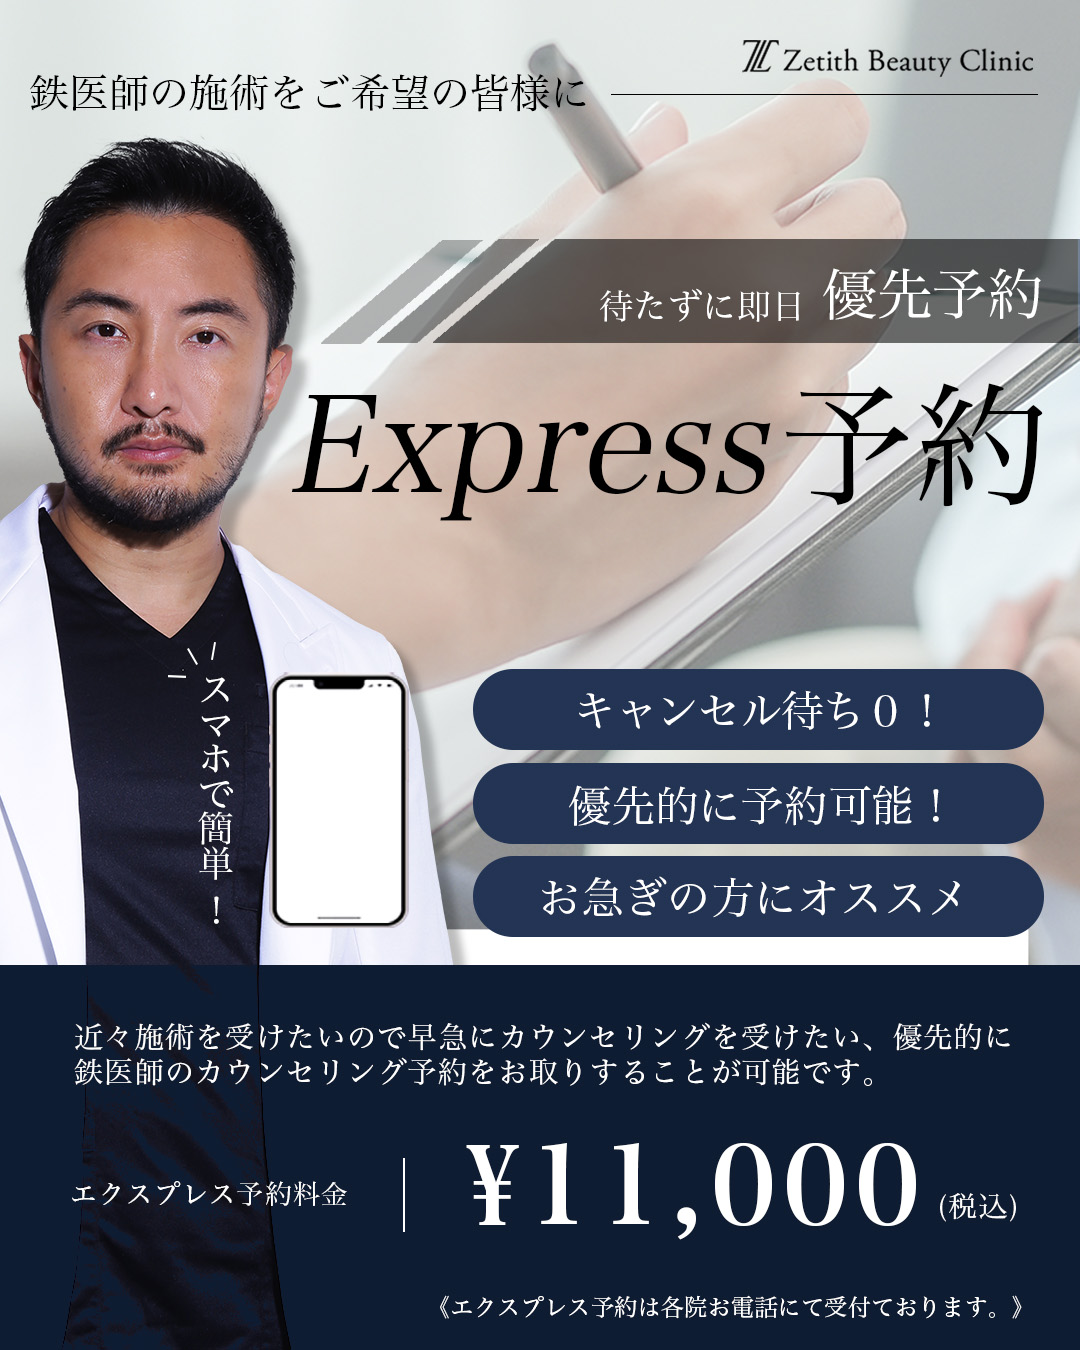 【Express予約】<br> 鉄医師カウンセリング 優先予約